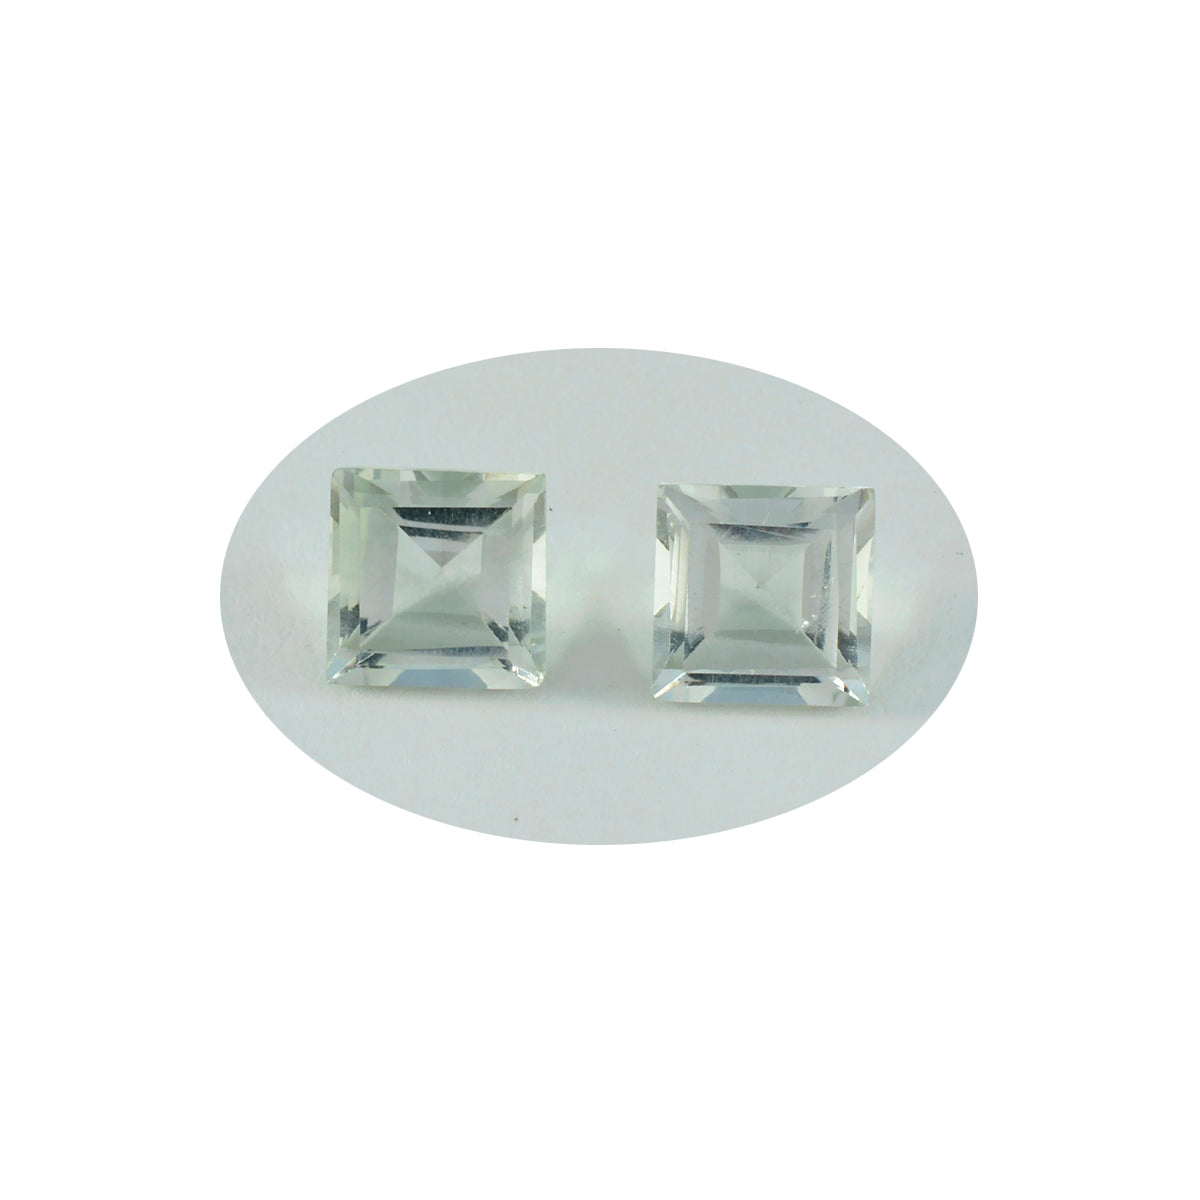 Riyogems 1PC Green Amethyst Faceted 13x13 mm Square Shape A+ Quality Gems